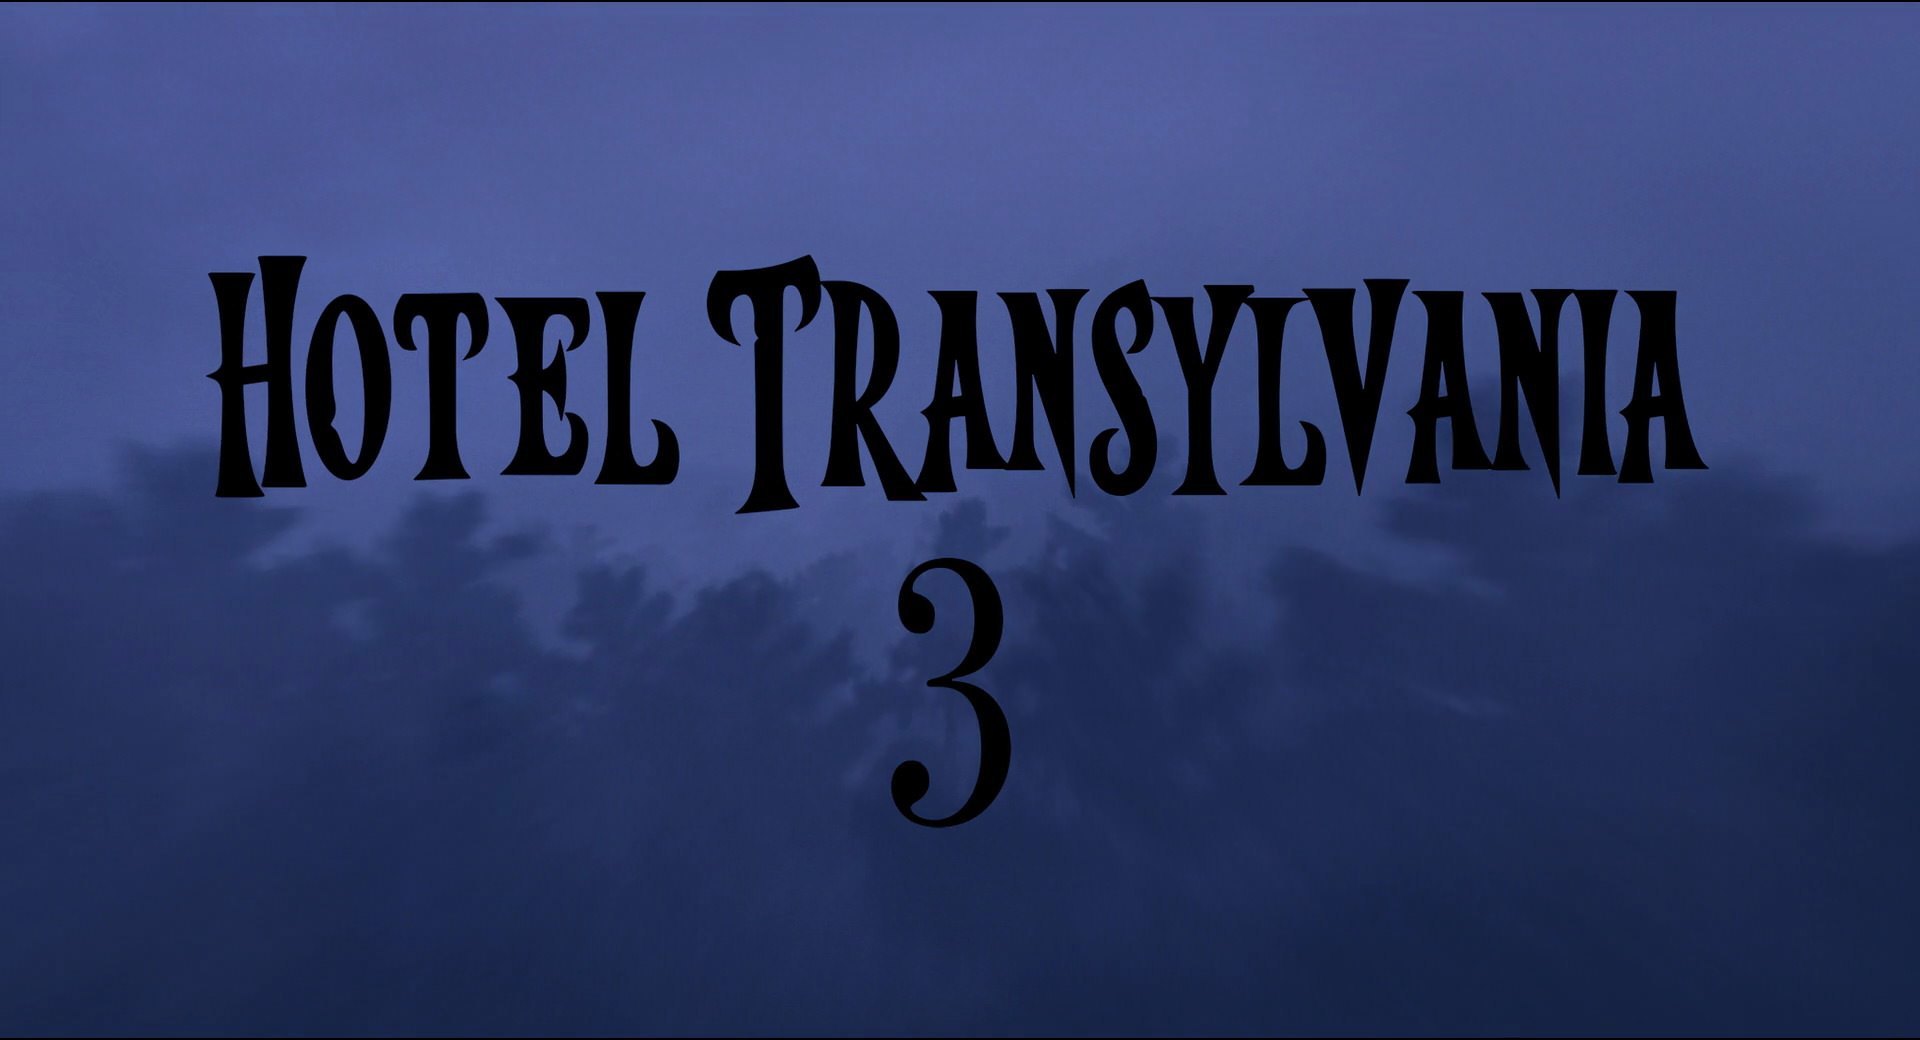 Hotel Transylvania 3 Screencaps Wallpapers